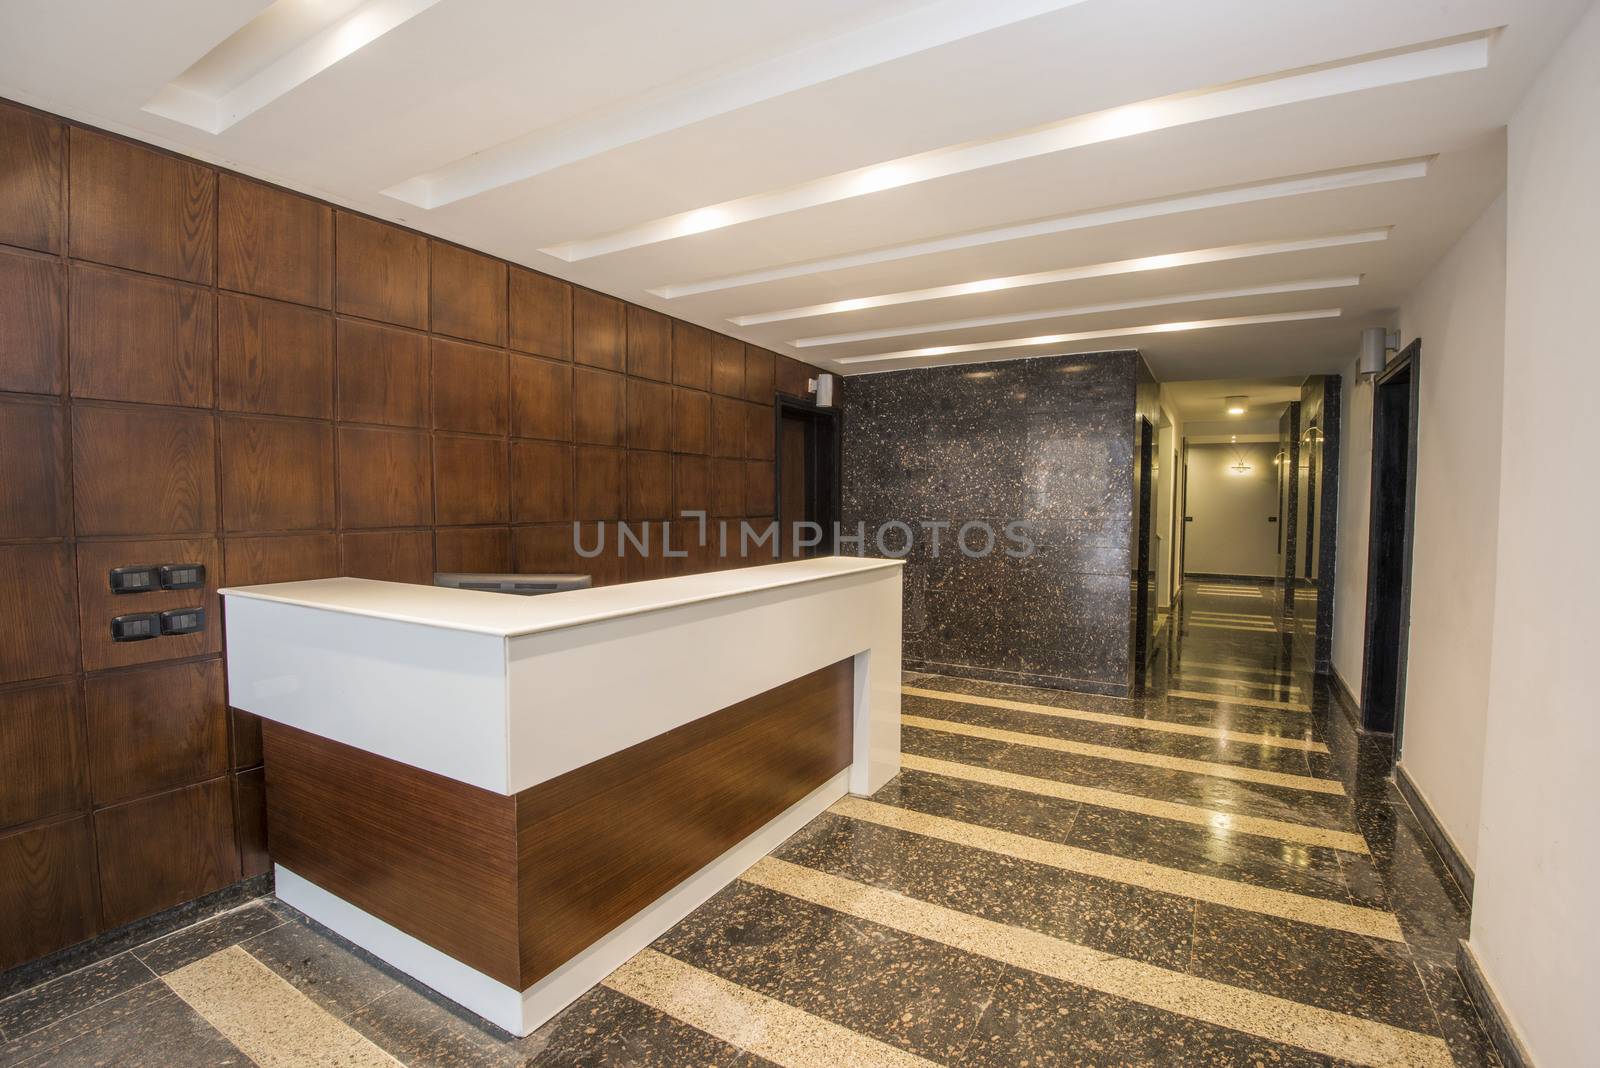 Interior corridor os a luxury apartment building by paulvinten